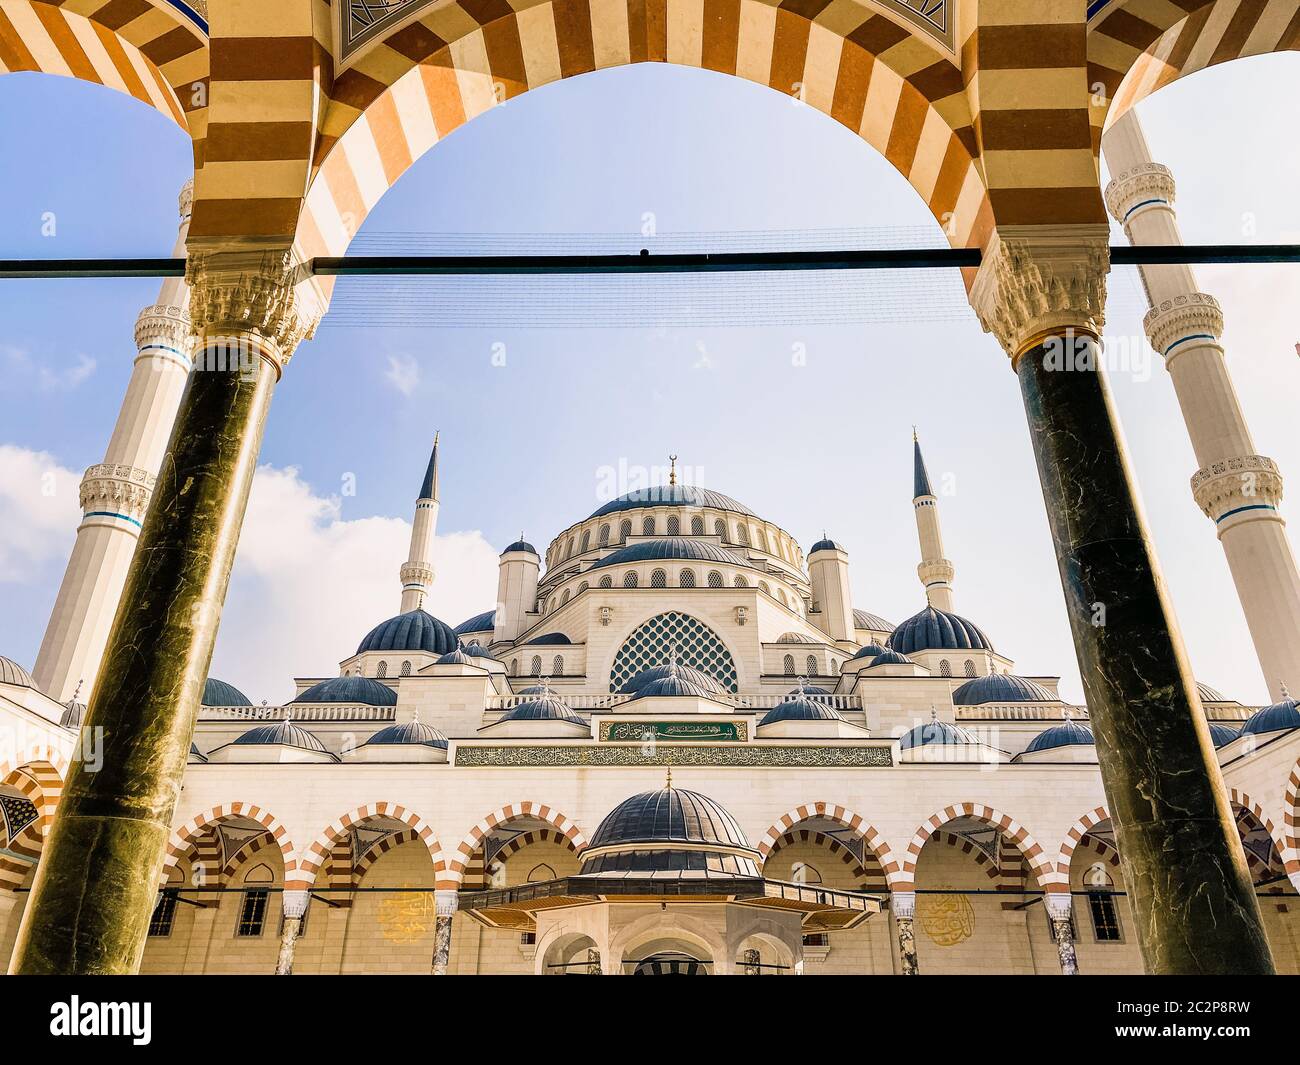 30 octobre 2019. Mosquée Camlica d'Istanbul. Camlica turque Camii. La plus grande mosquée de Turquie. La nouvelle mosquée et la plus grande moi Banque D'Images